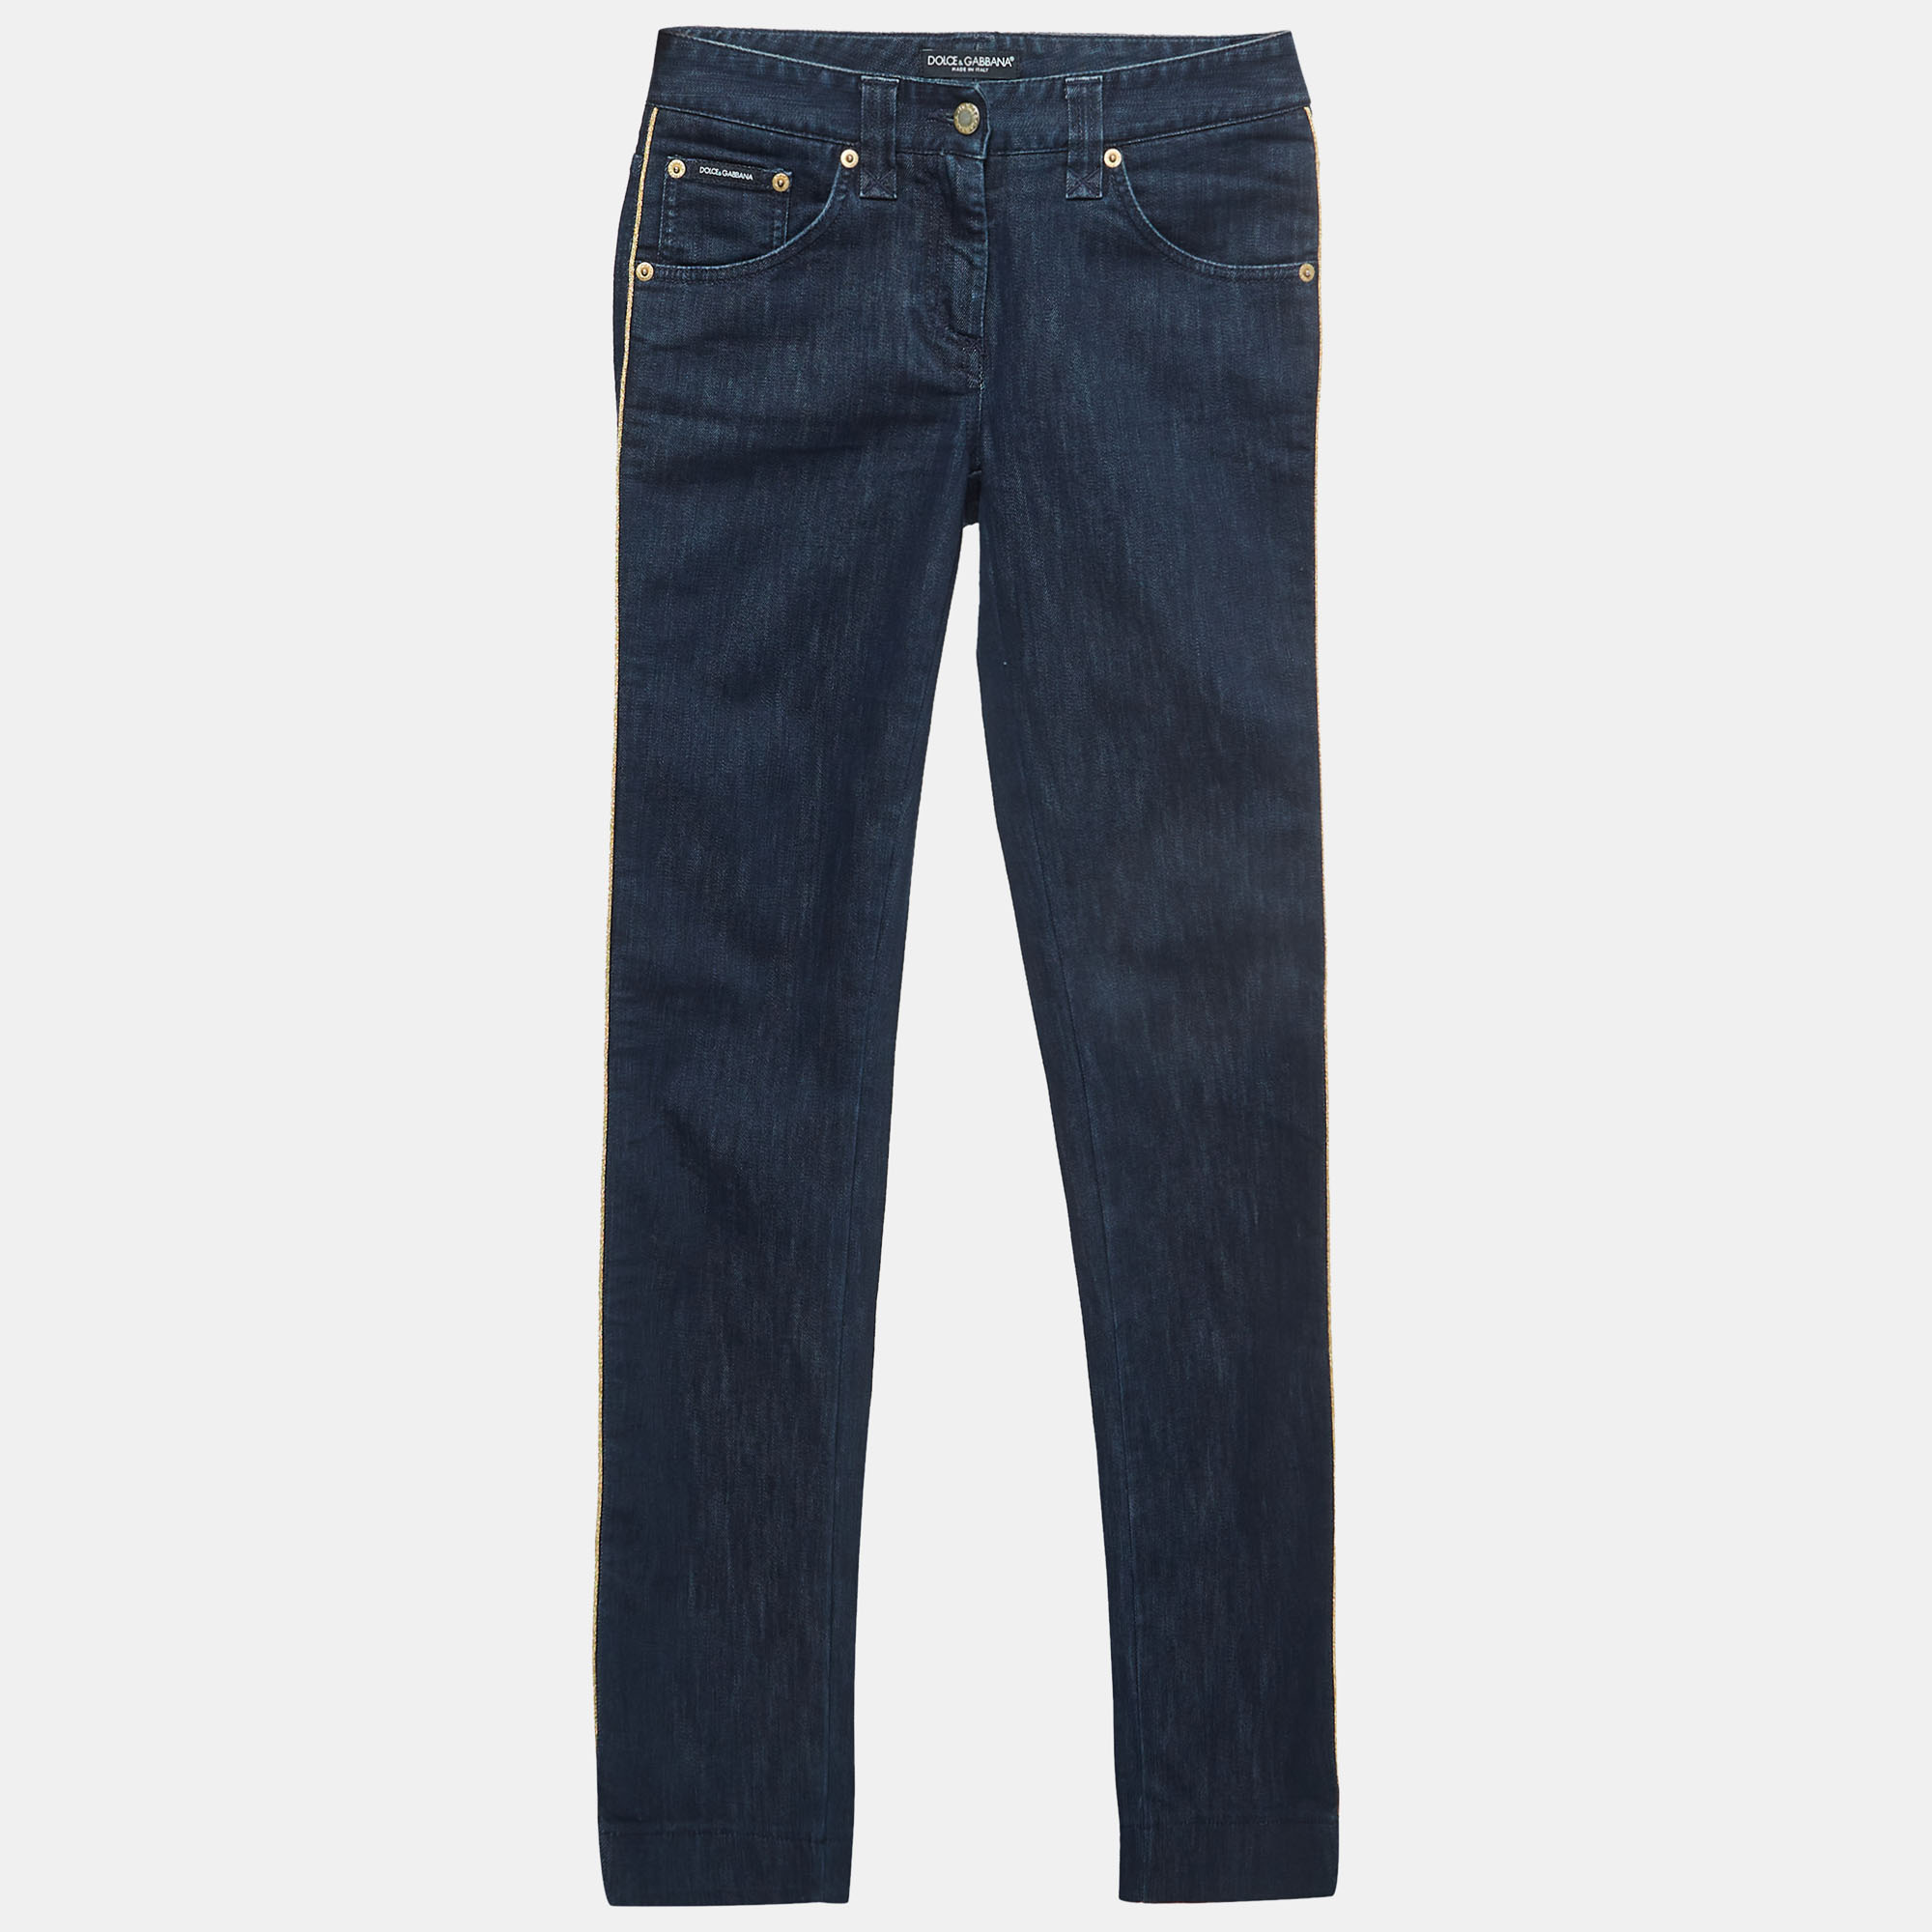 Dolce & gabbana navy blue side stripe denim jeans s waist 28''